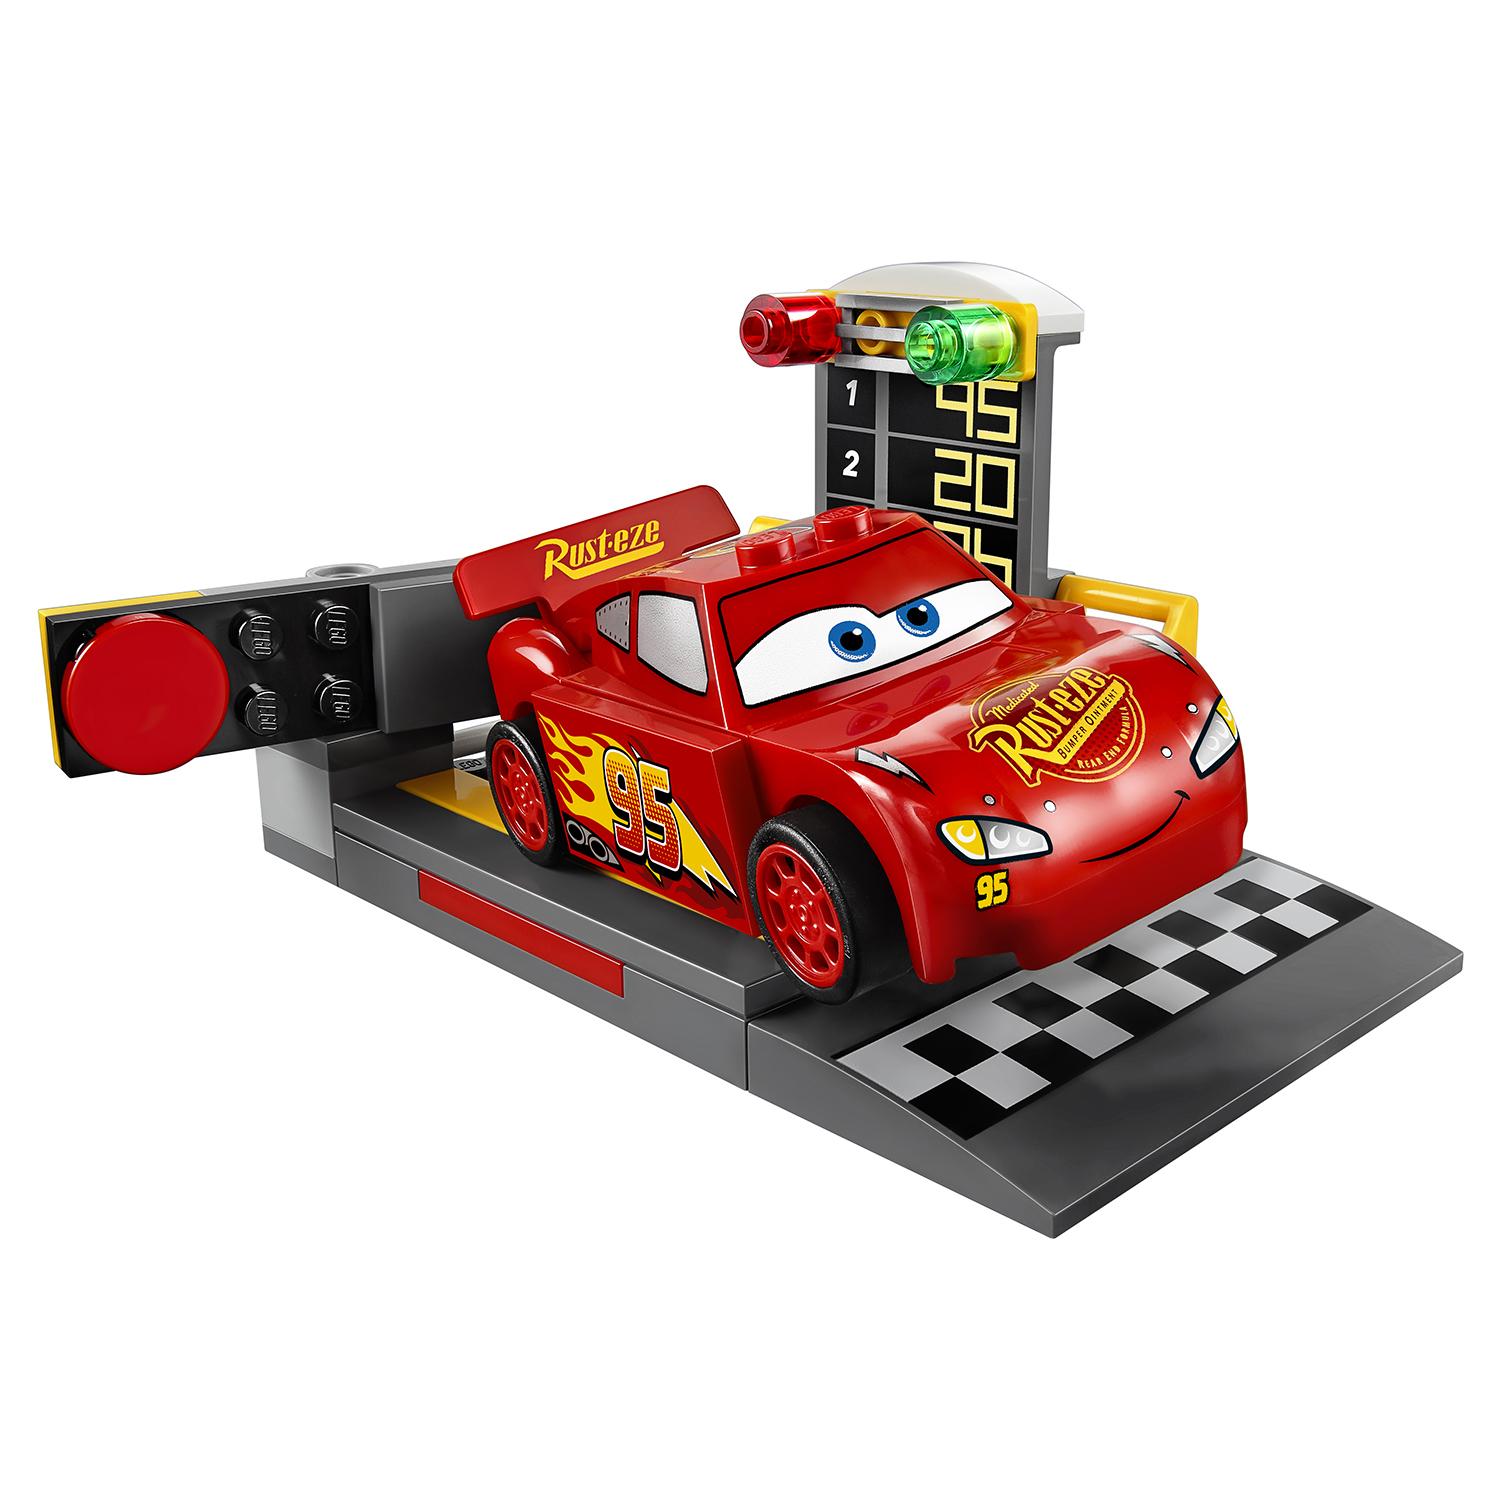 Lego Juniors 10730 Устройство для запуска Молнии МакКуина